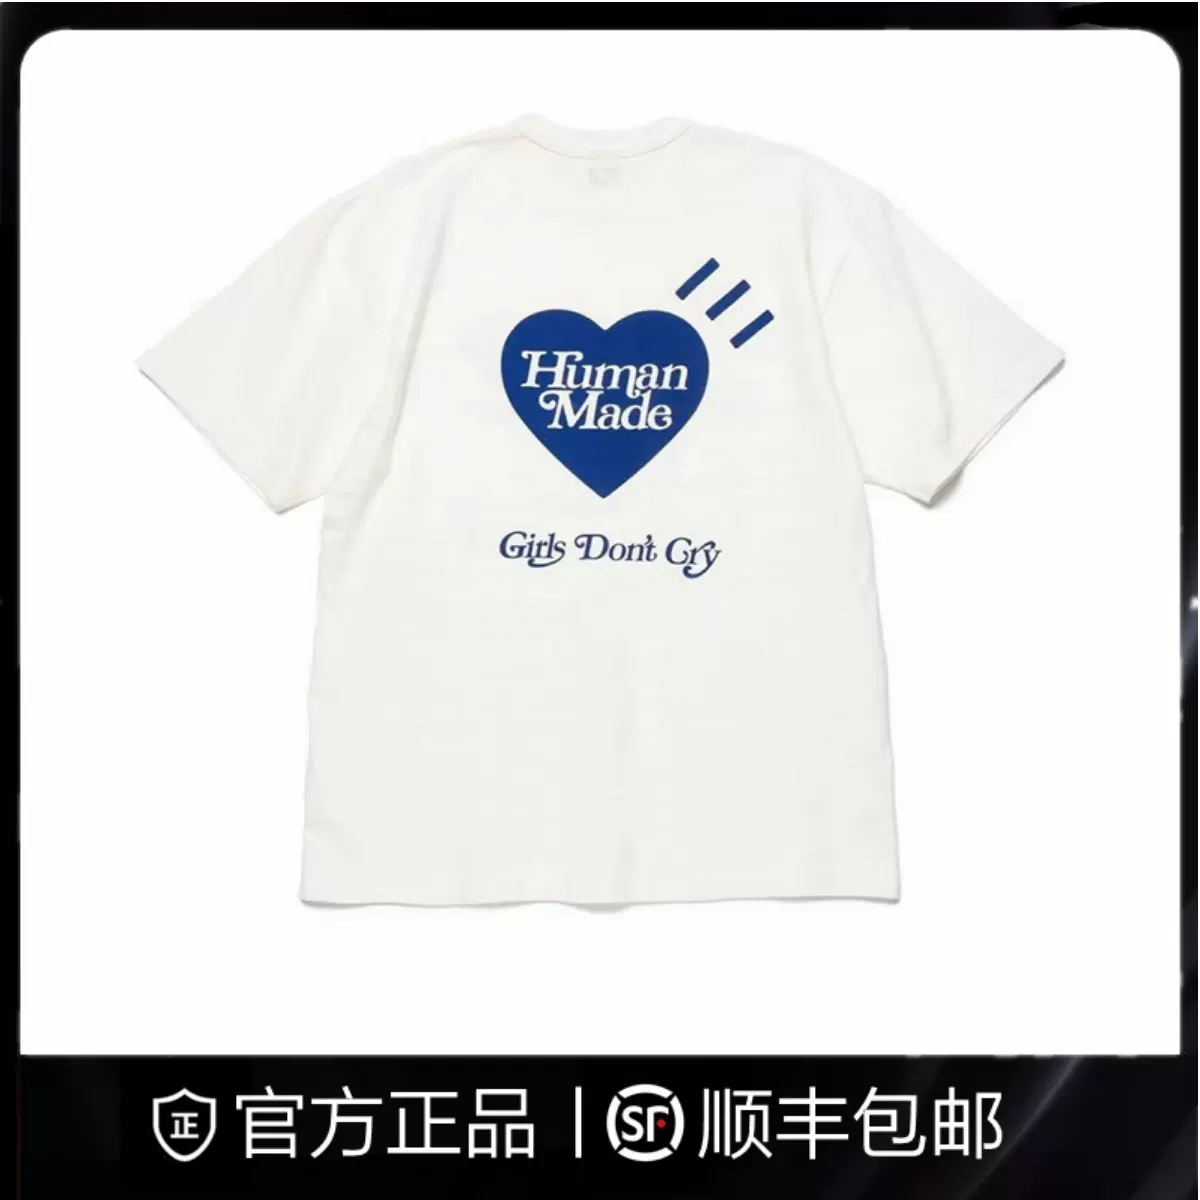 国内现货】Human Made Girls Don't Cry伊势丹联名爱心短袖T恤-Taobao 